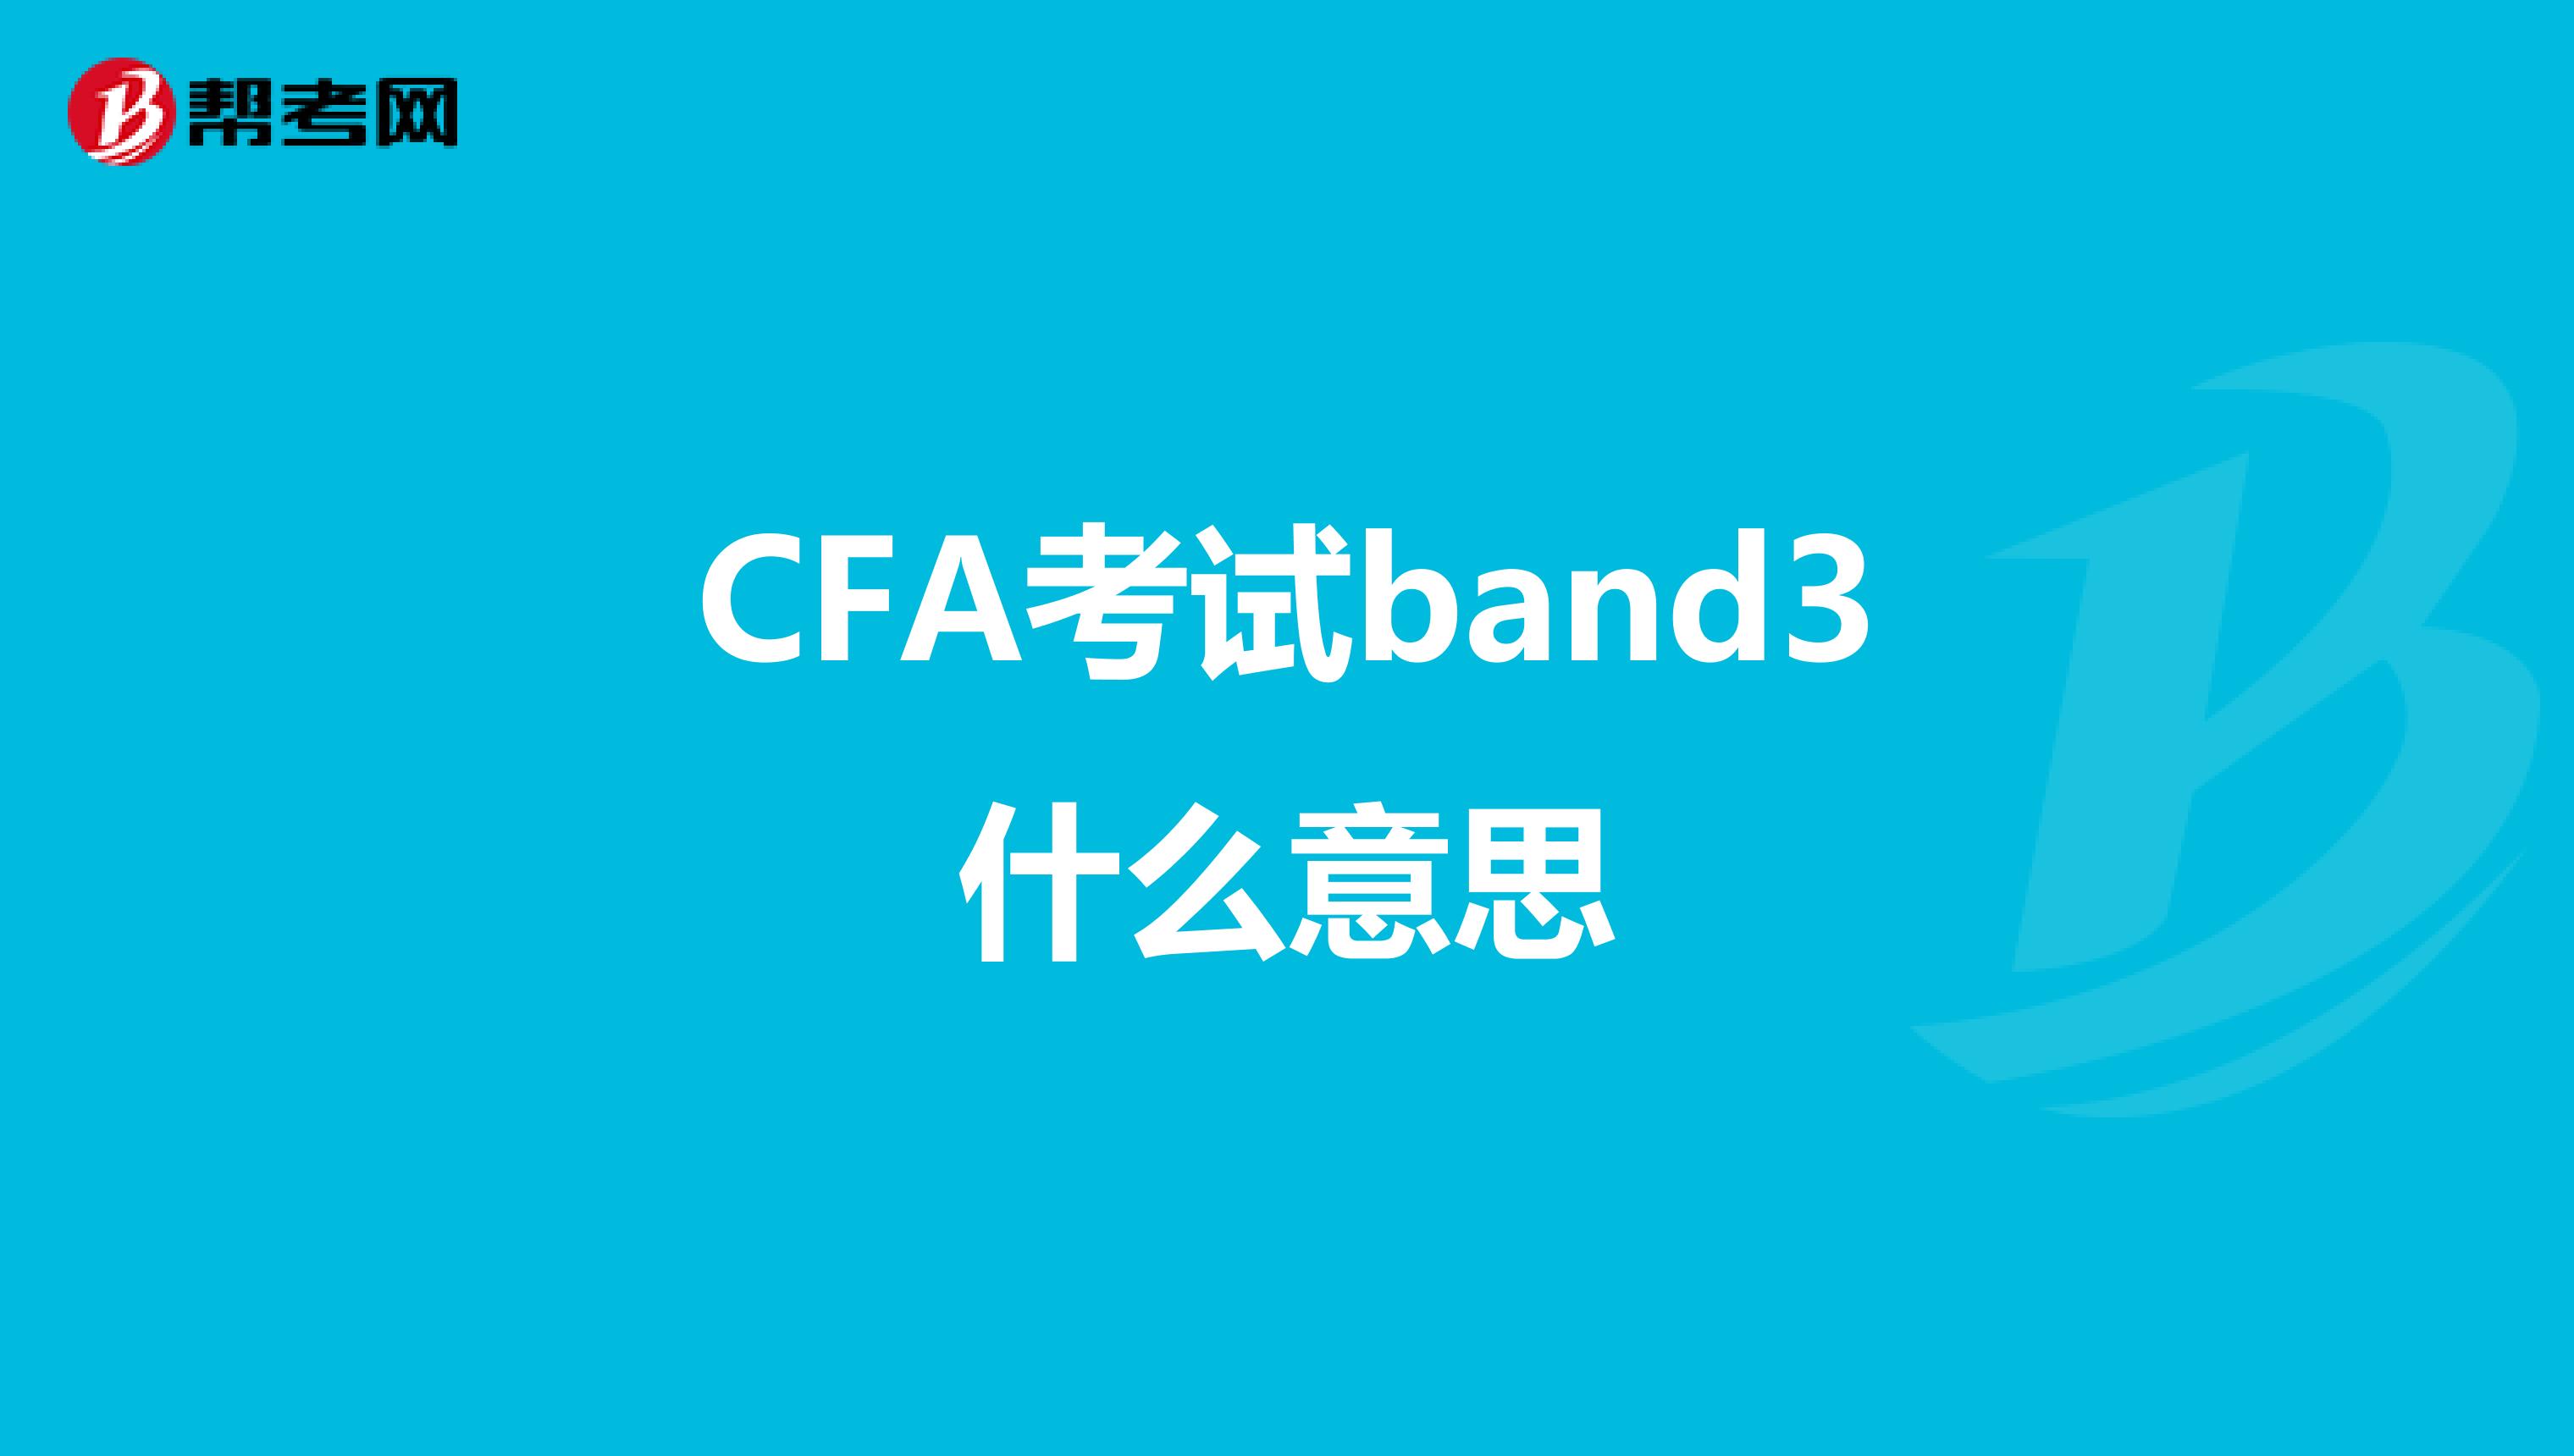 CFA考试band3什么意思